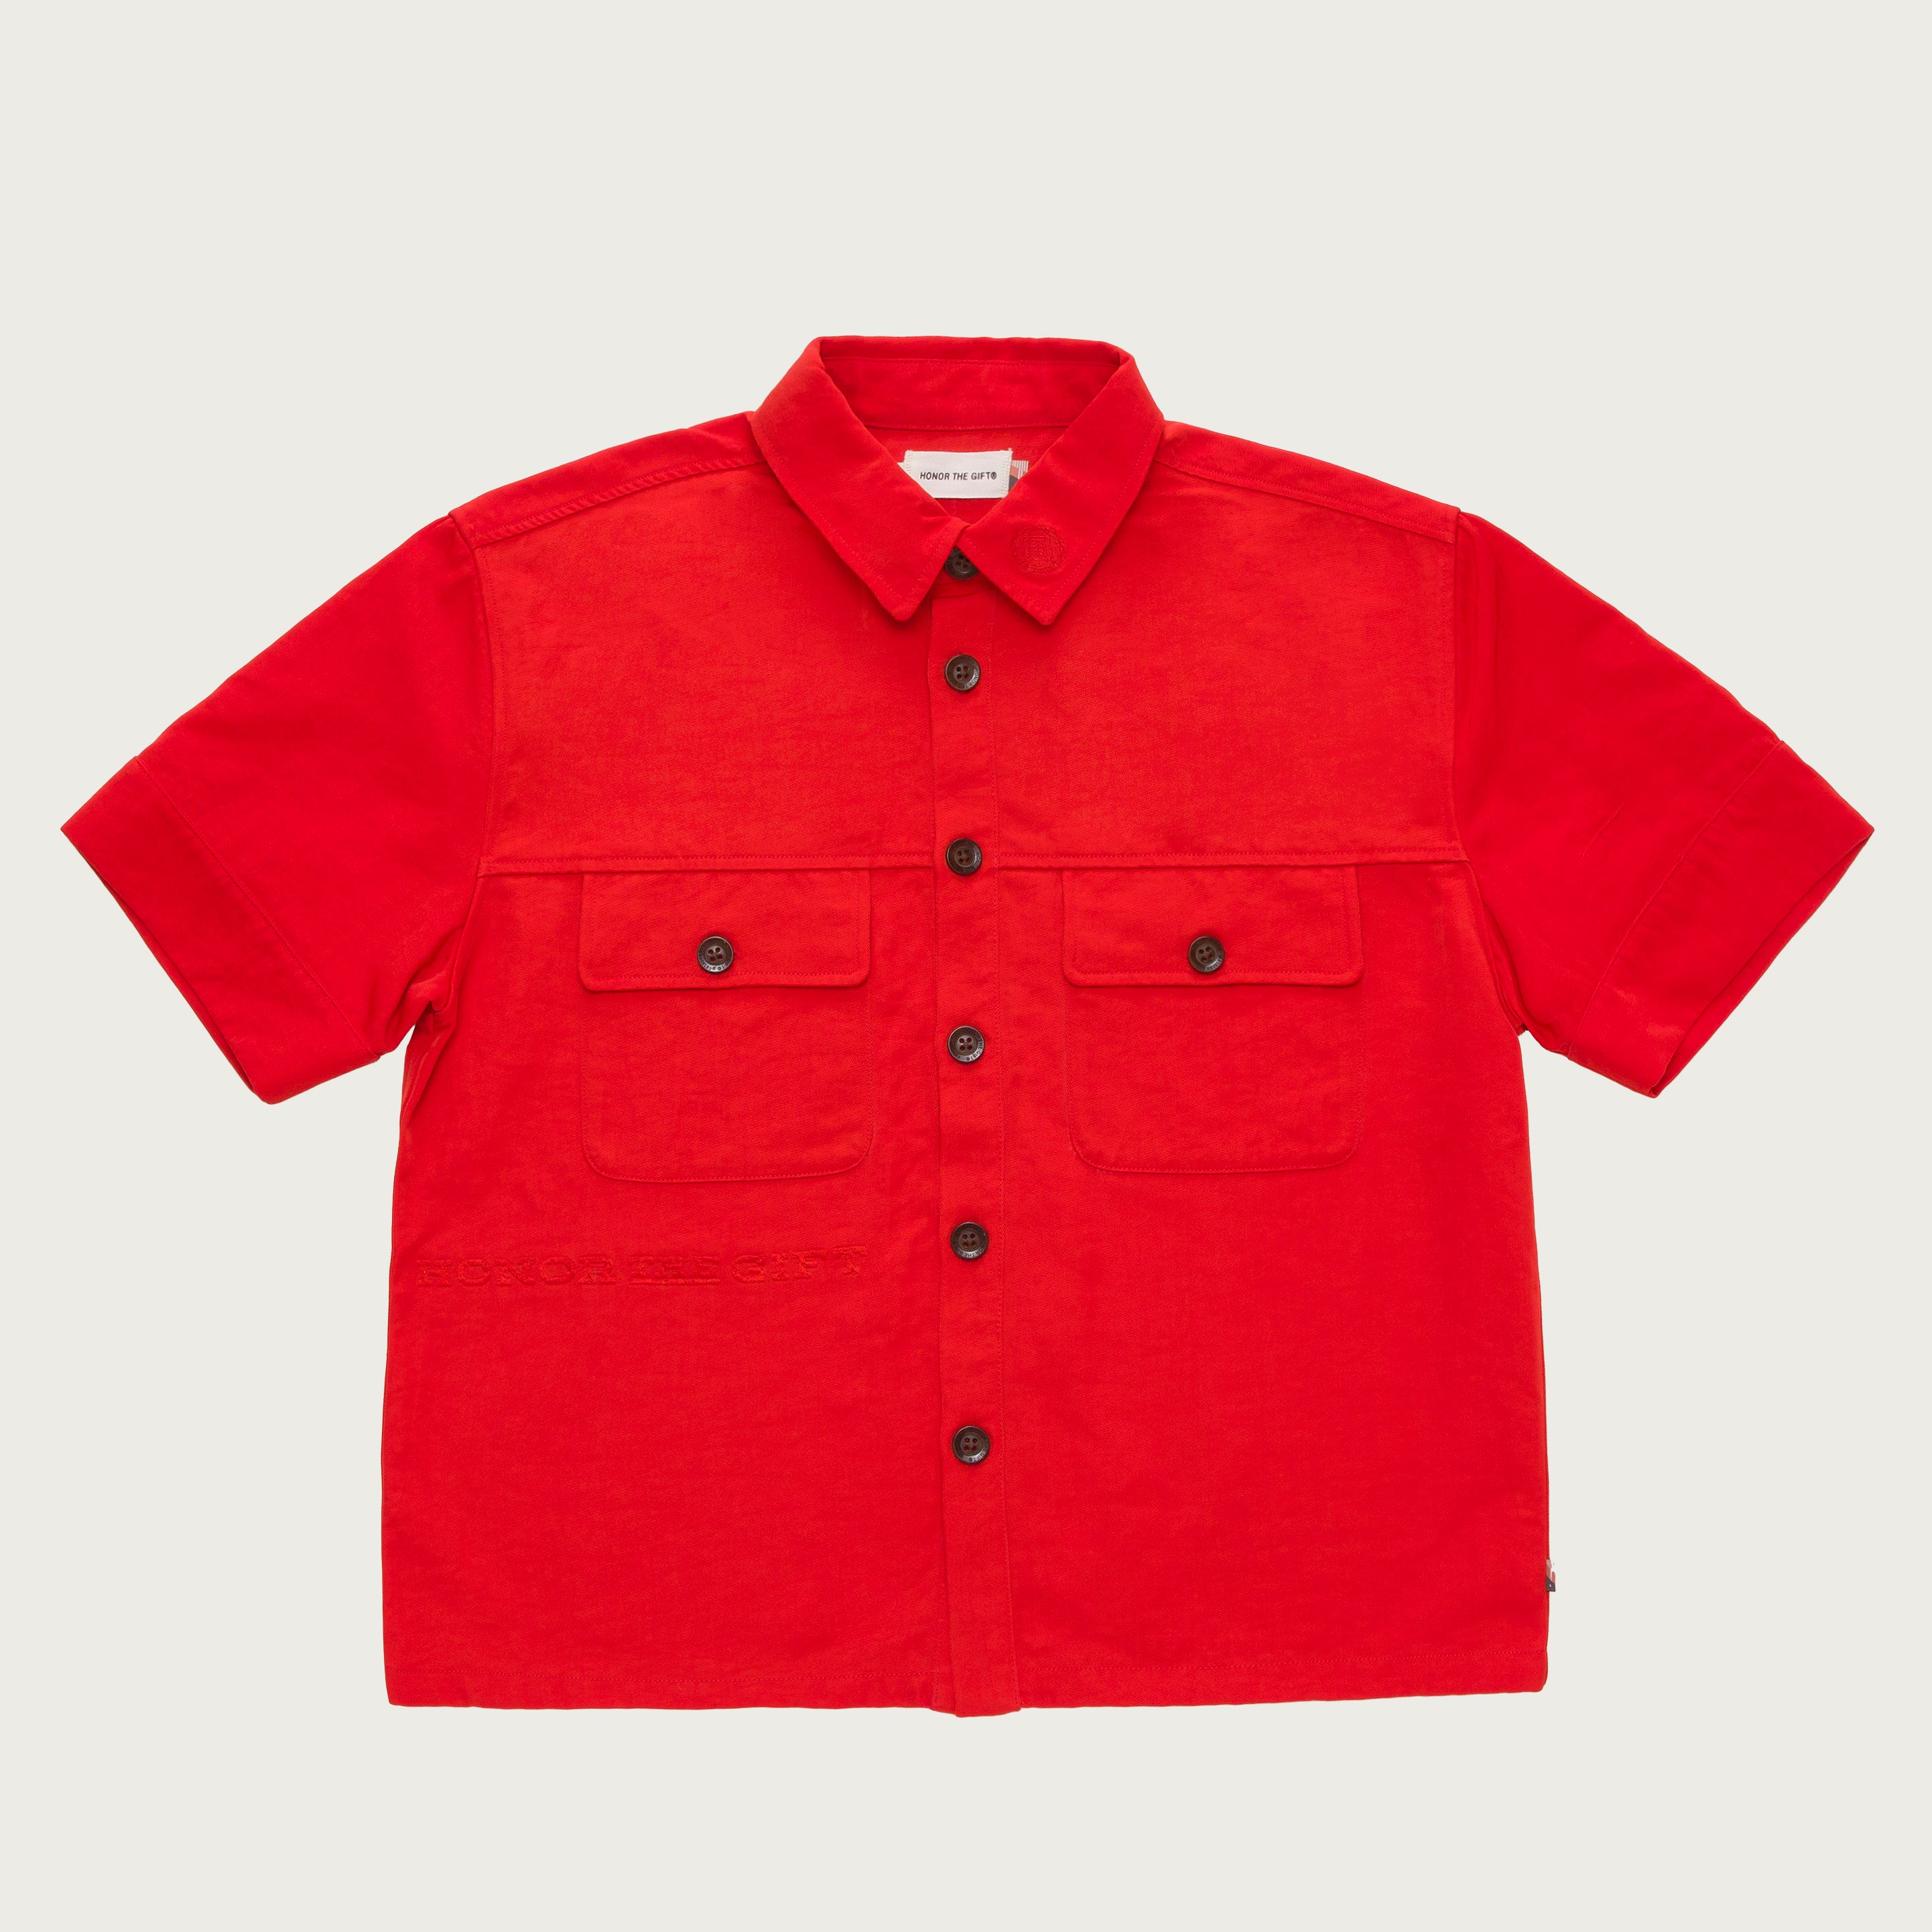 S/S Shop Orange - – Shirt Honor The Gift